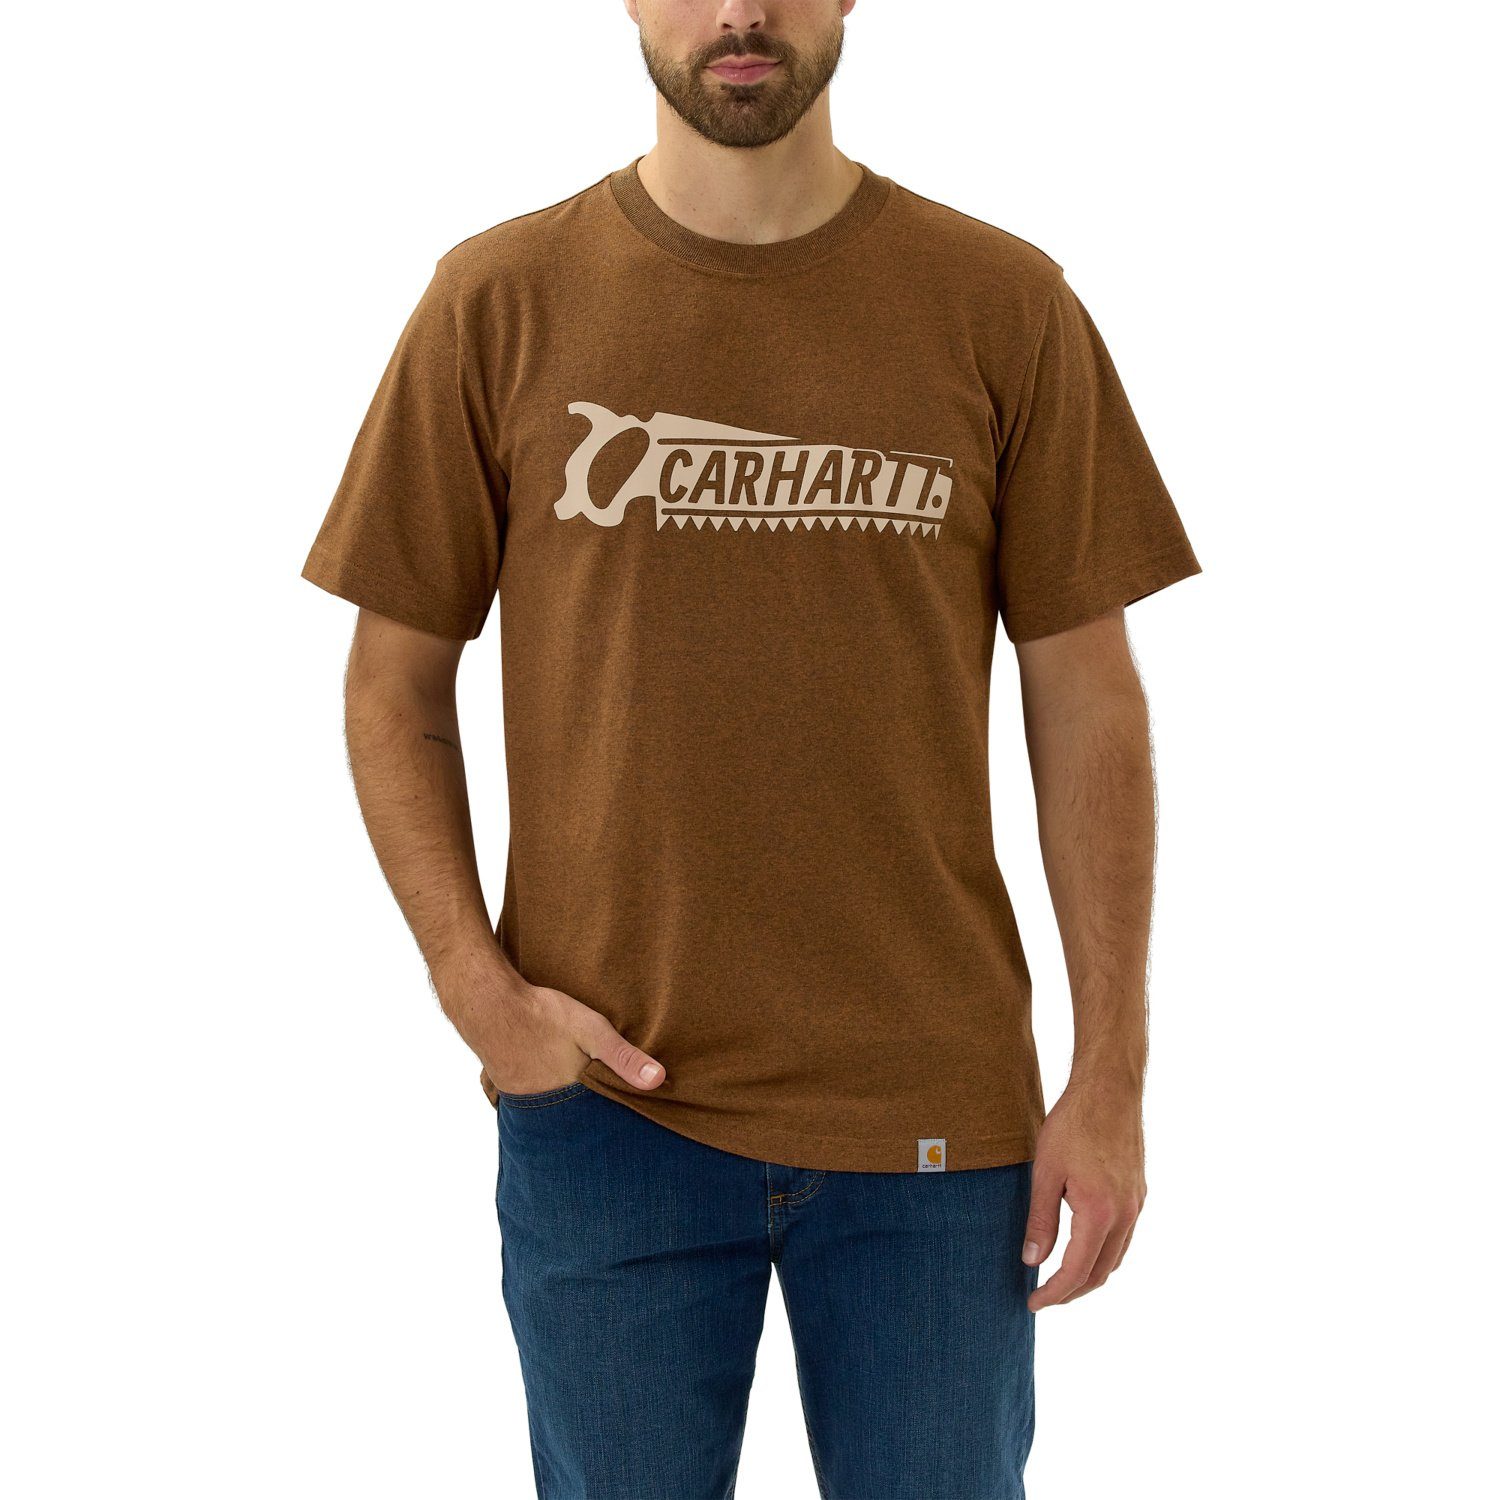 walnut Carhartt oiled Graphic heather Herren Carhartt T-Shirt T-Shirt Saw Adult